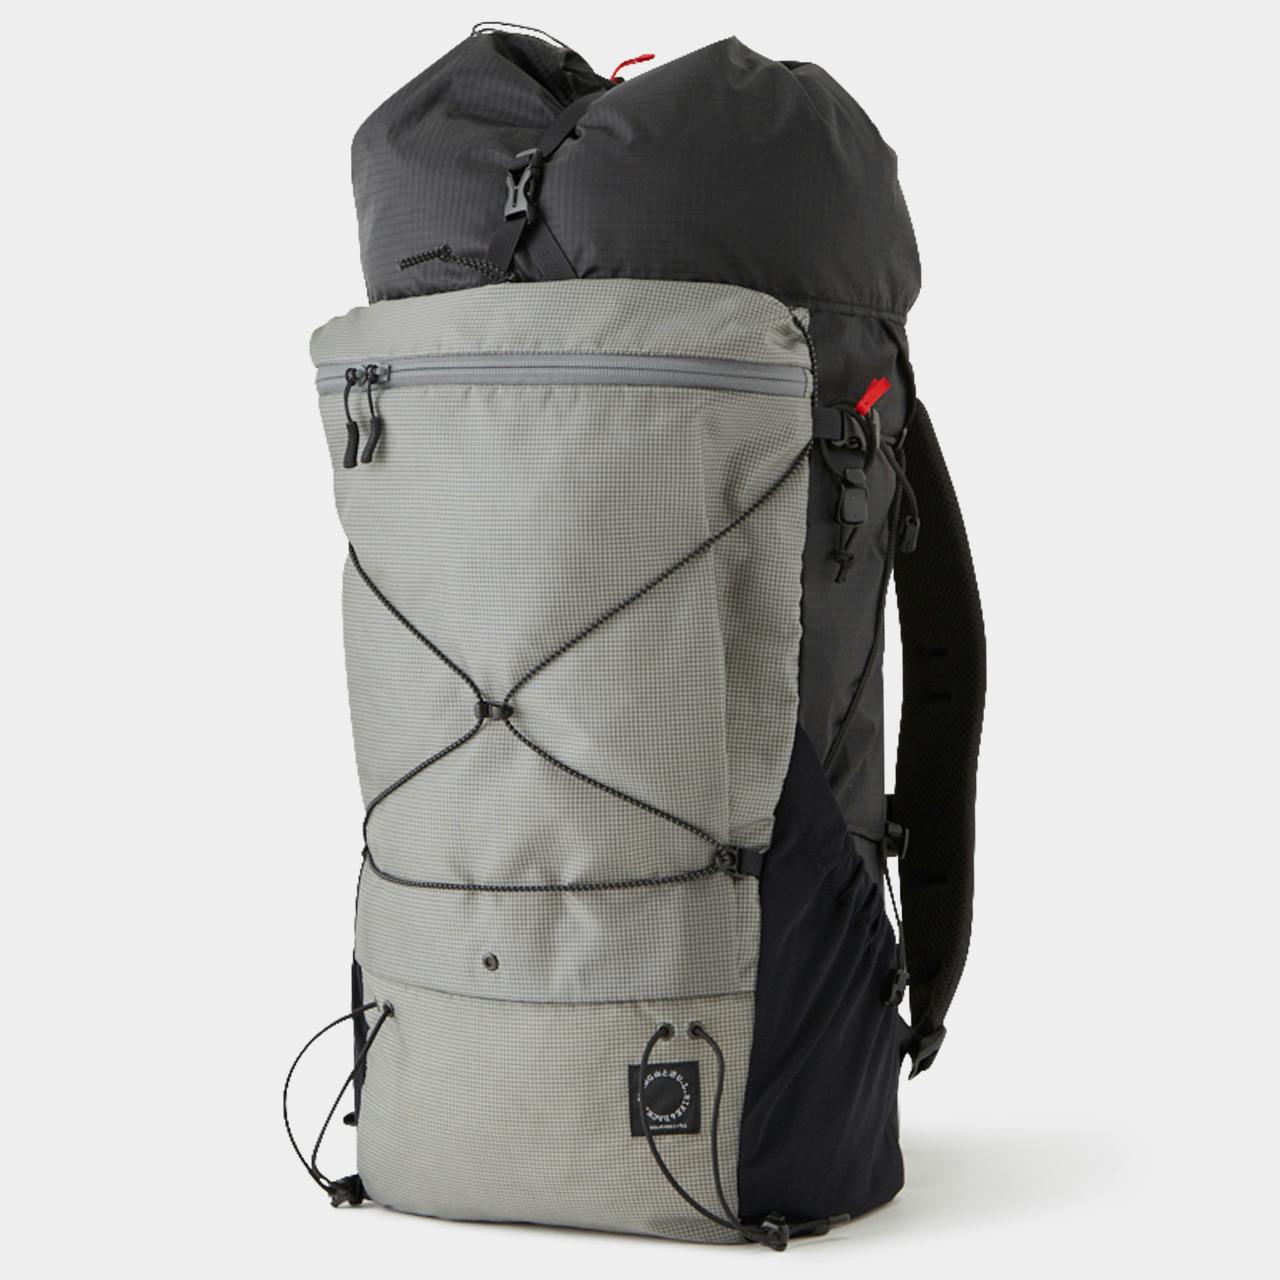 MINI<br>For Sale Apr 24, 18:00 JST<br>Restocked on Online Shop<br>Lightweight and Durable Backpack